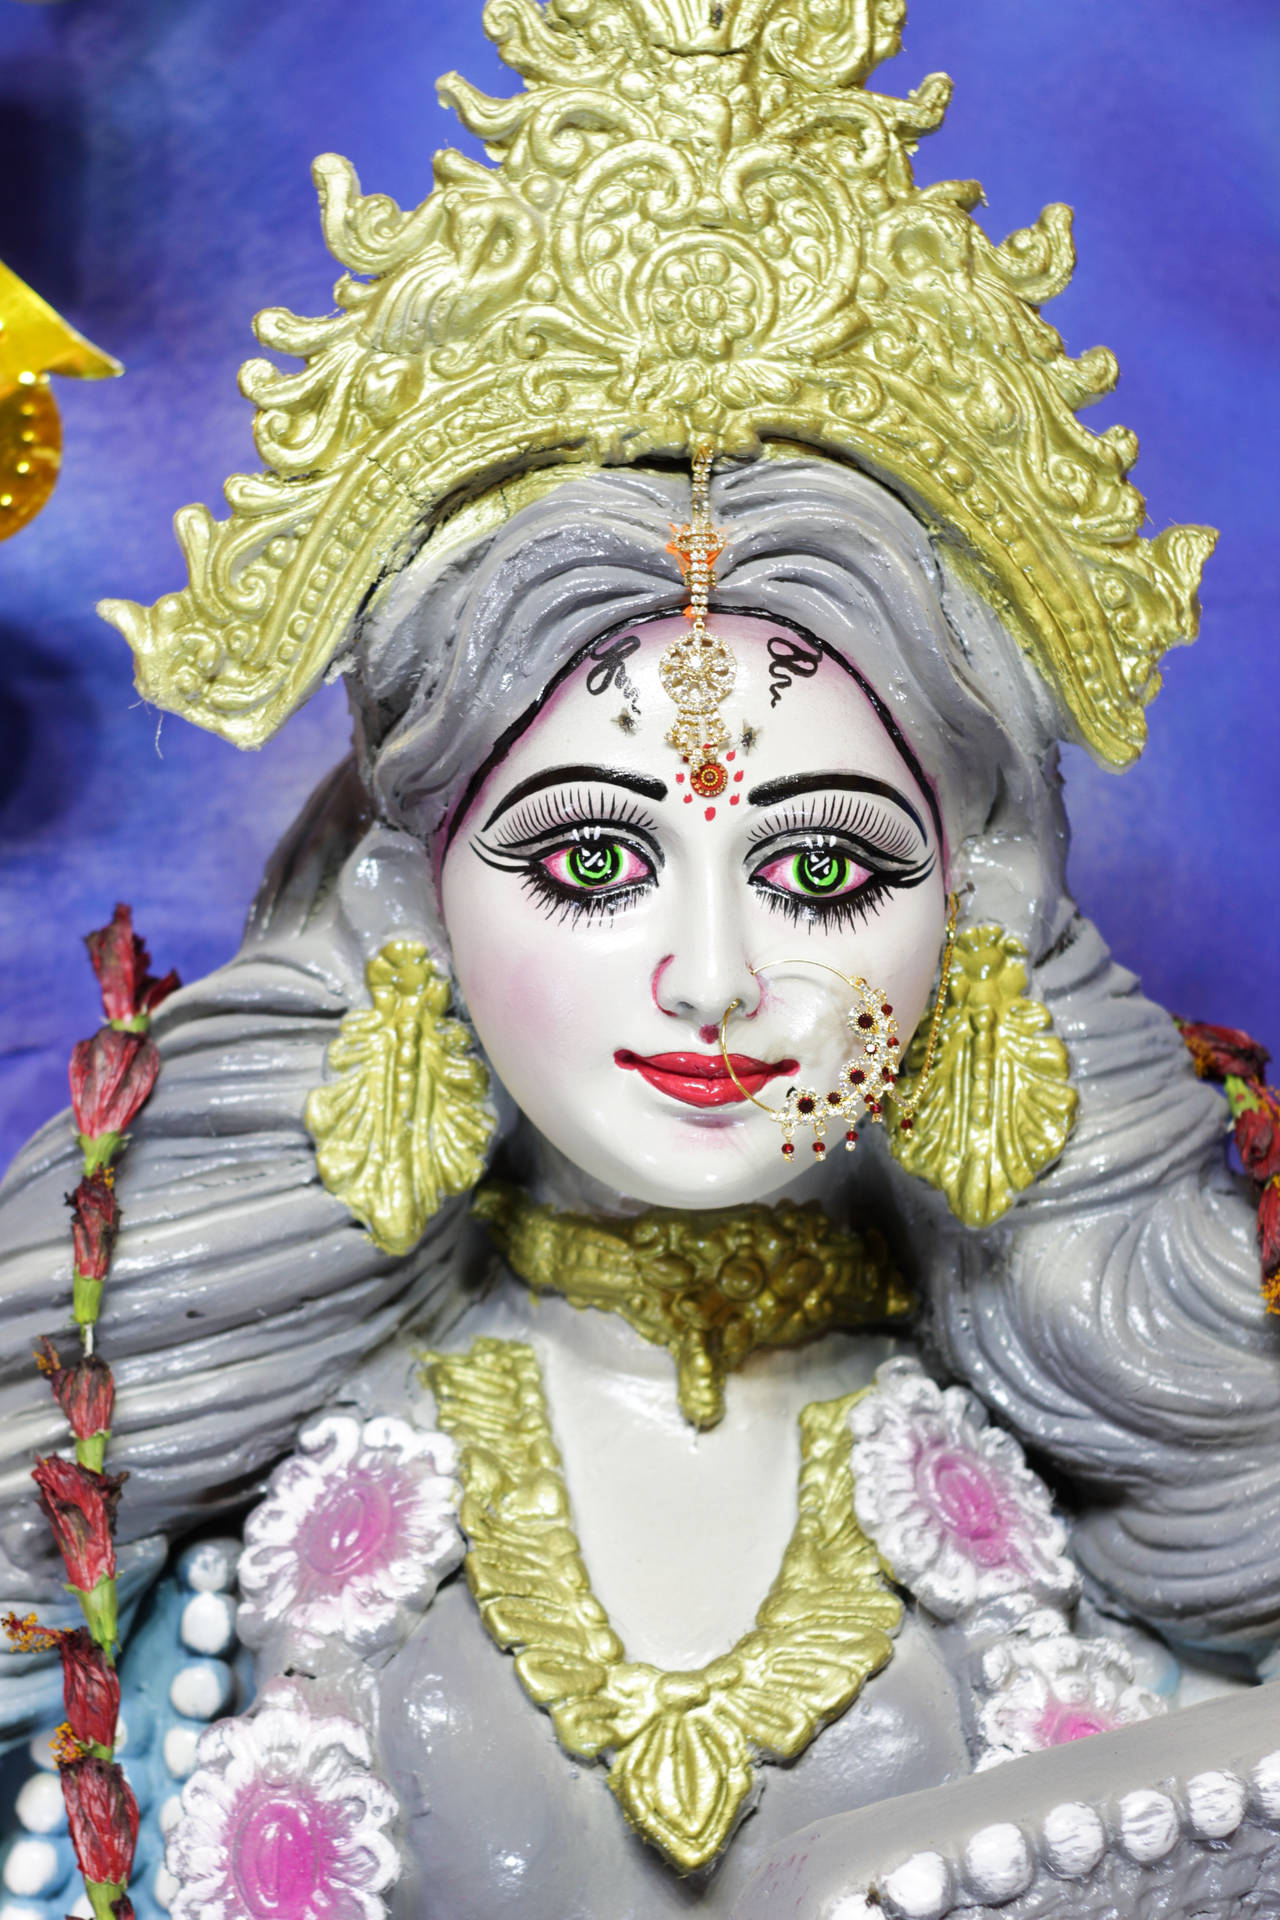 Caption: The Majestic Goddess Kali Background